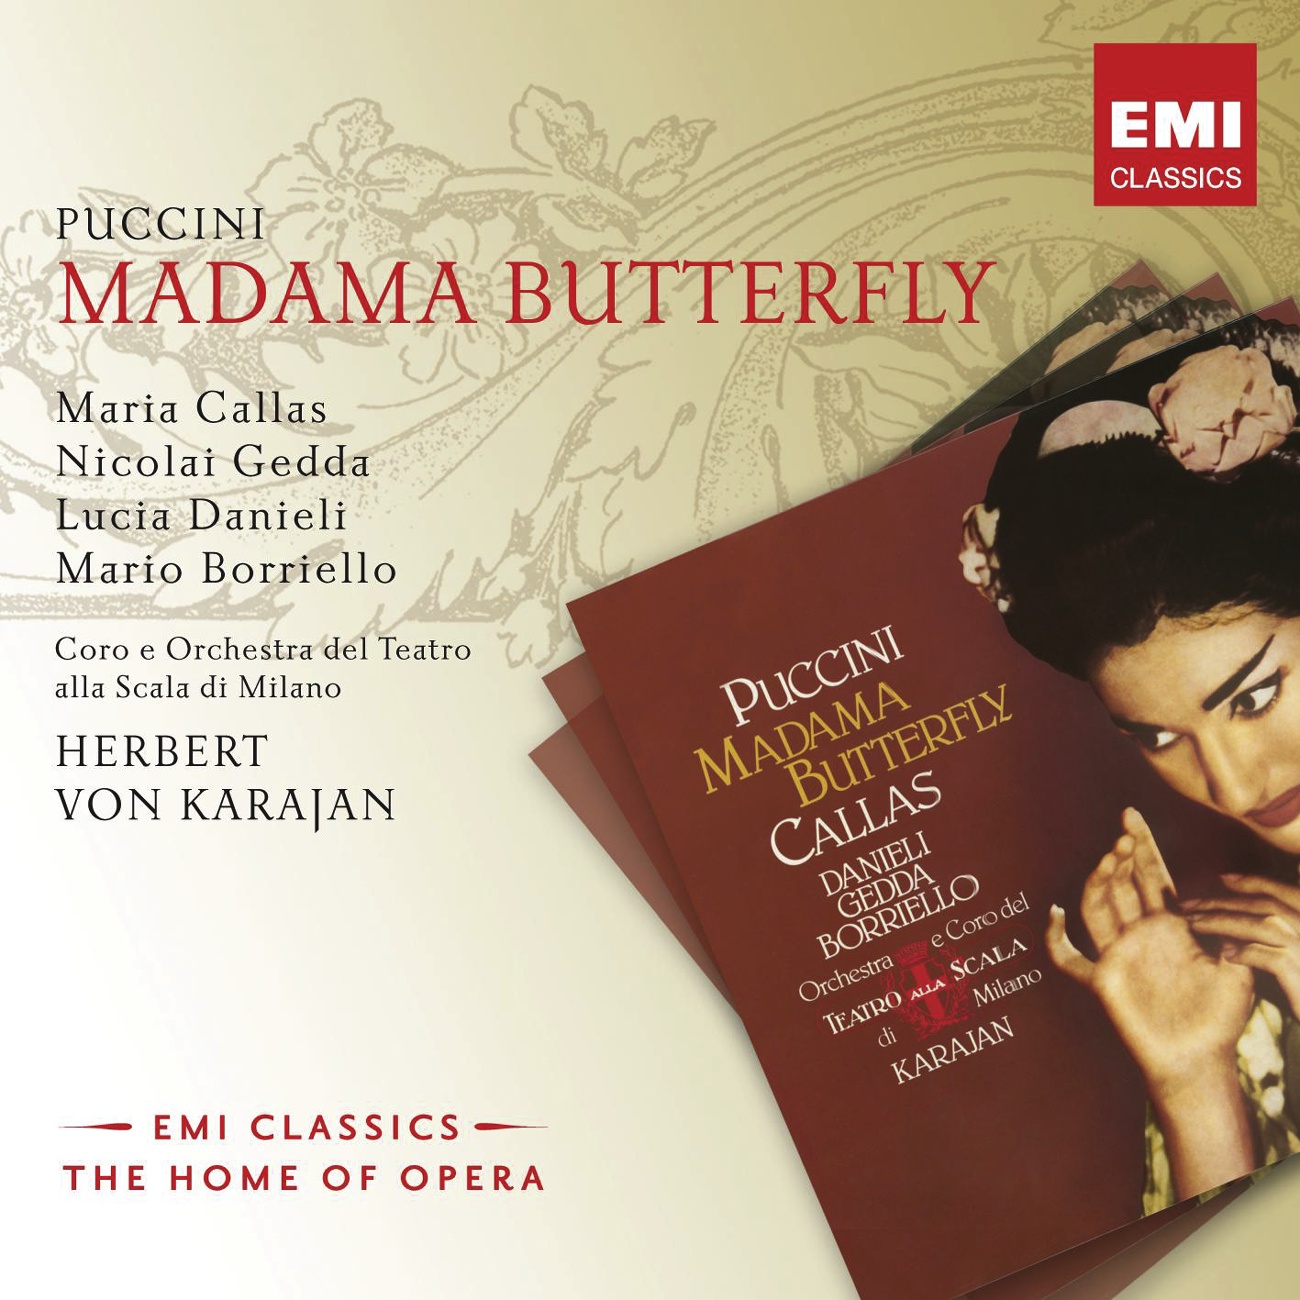 Madama Butterfly, Act 1: Bimba dagli occhi pieni di malia